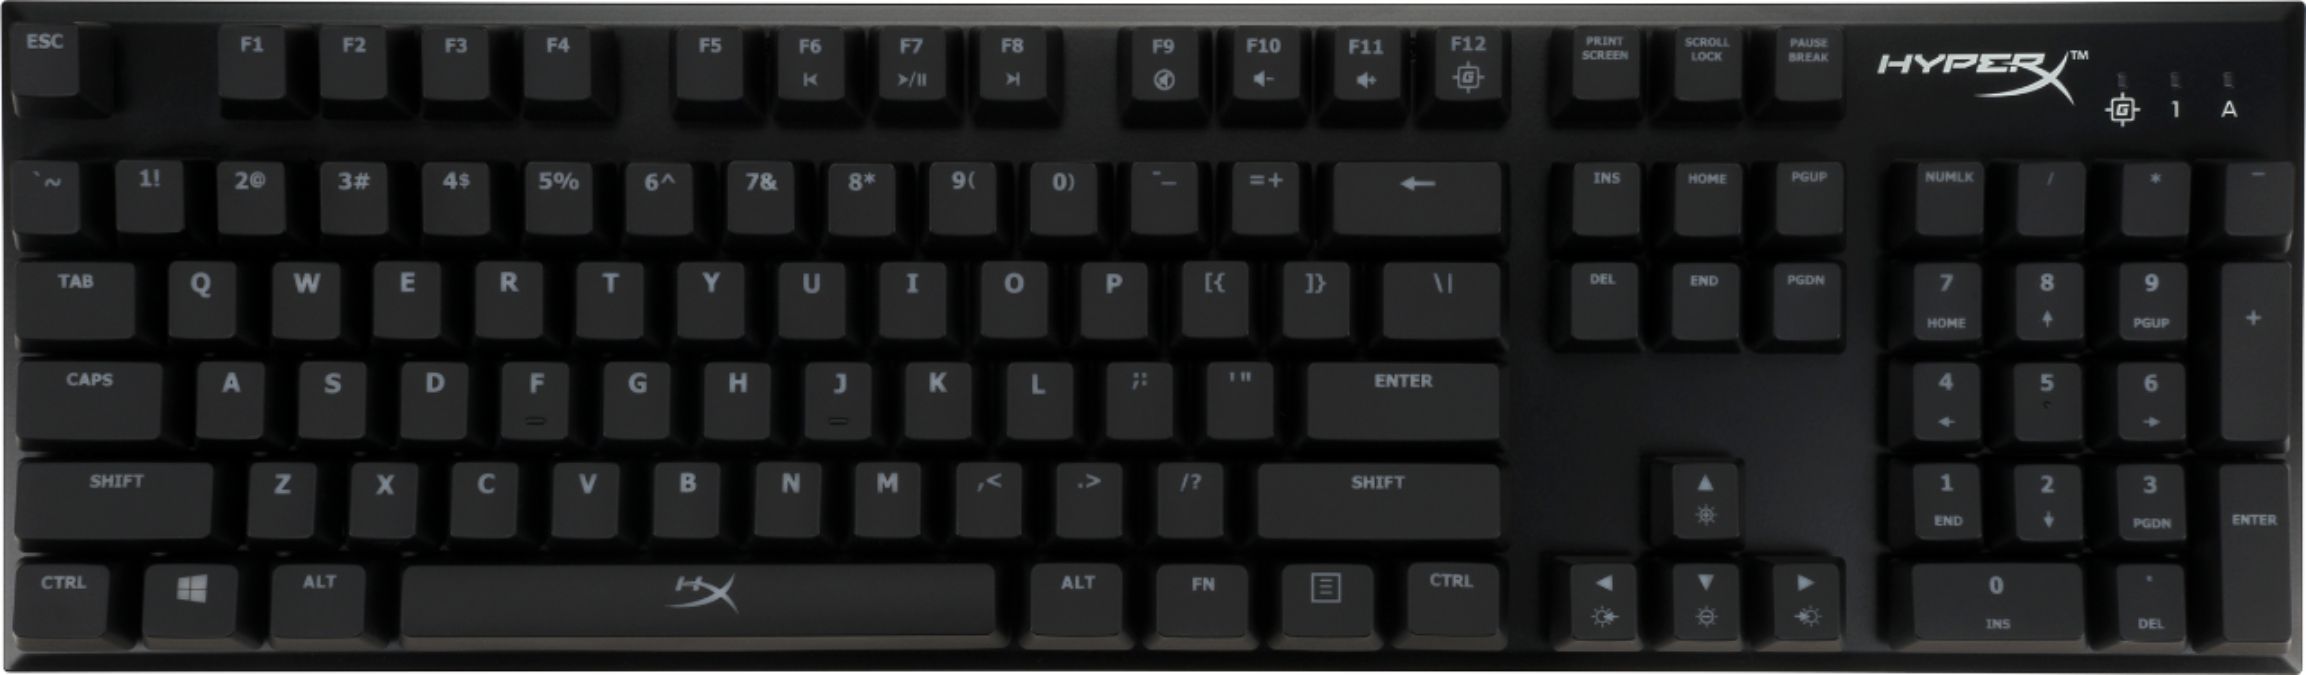 n key not working on keyboard